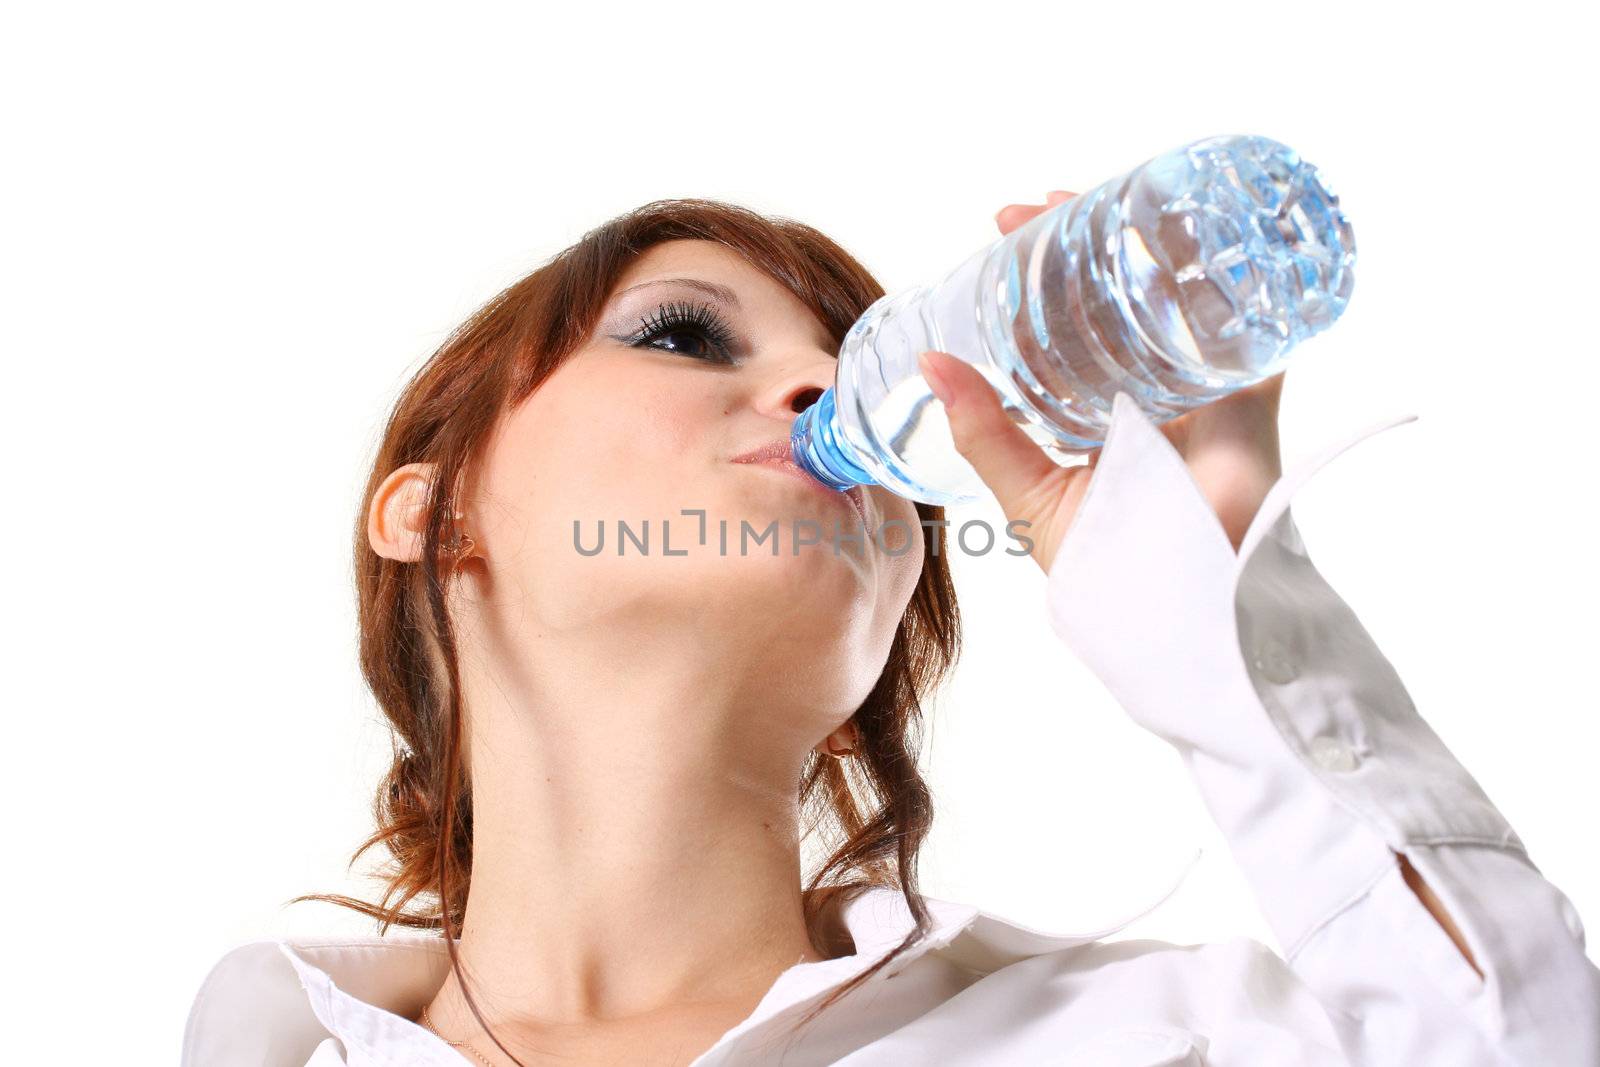 human drink portrait women healthy young bottle